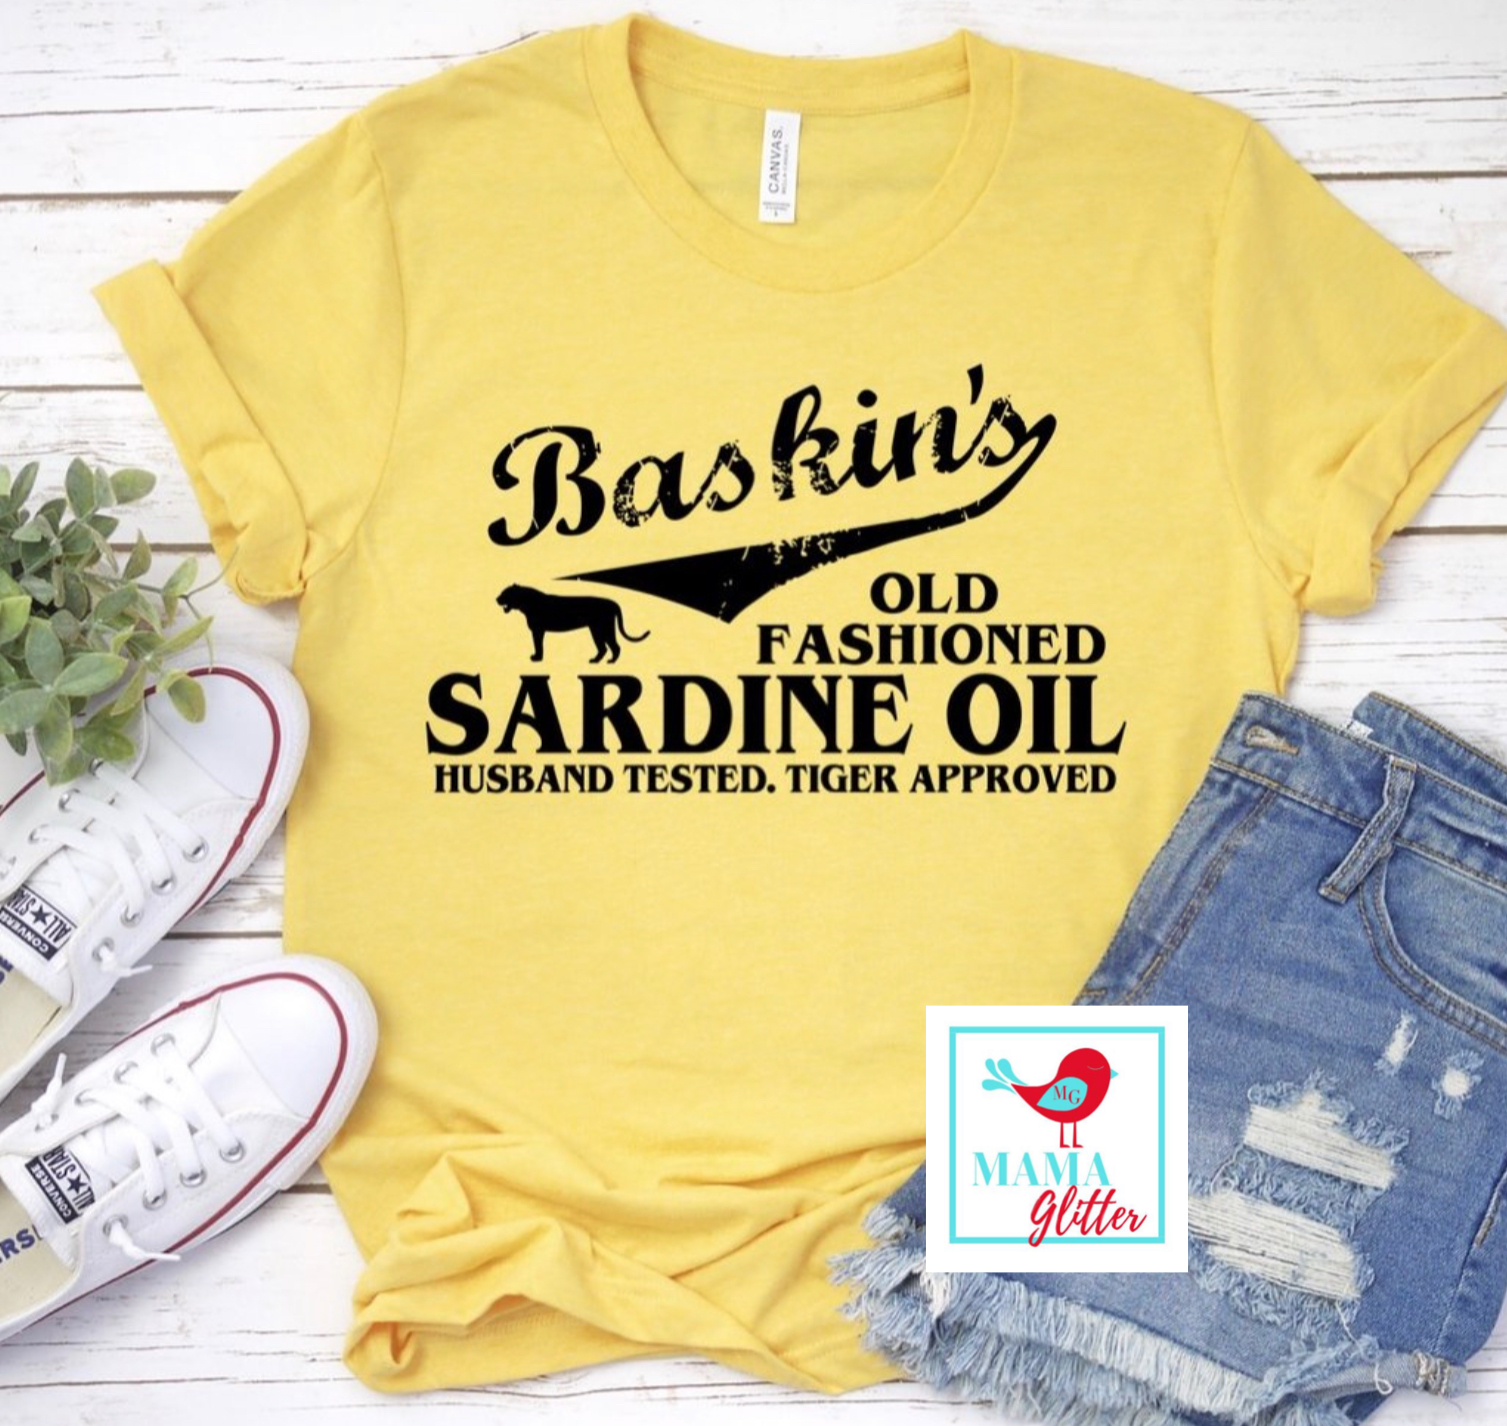 Baskin’s Old Fashioned Sardine Oil